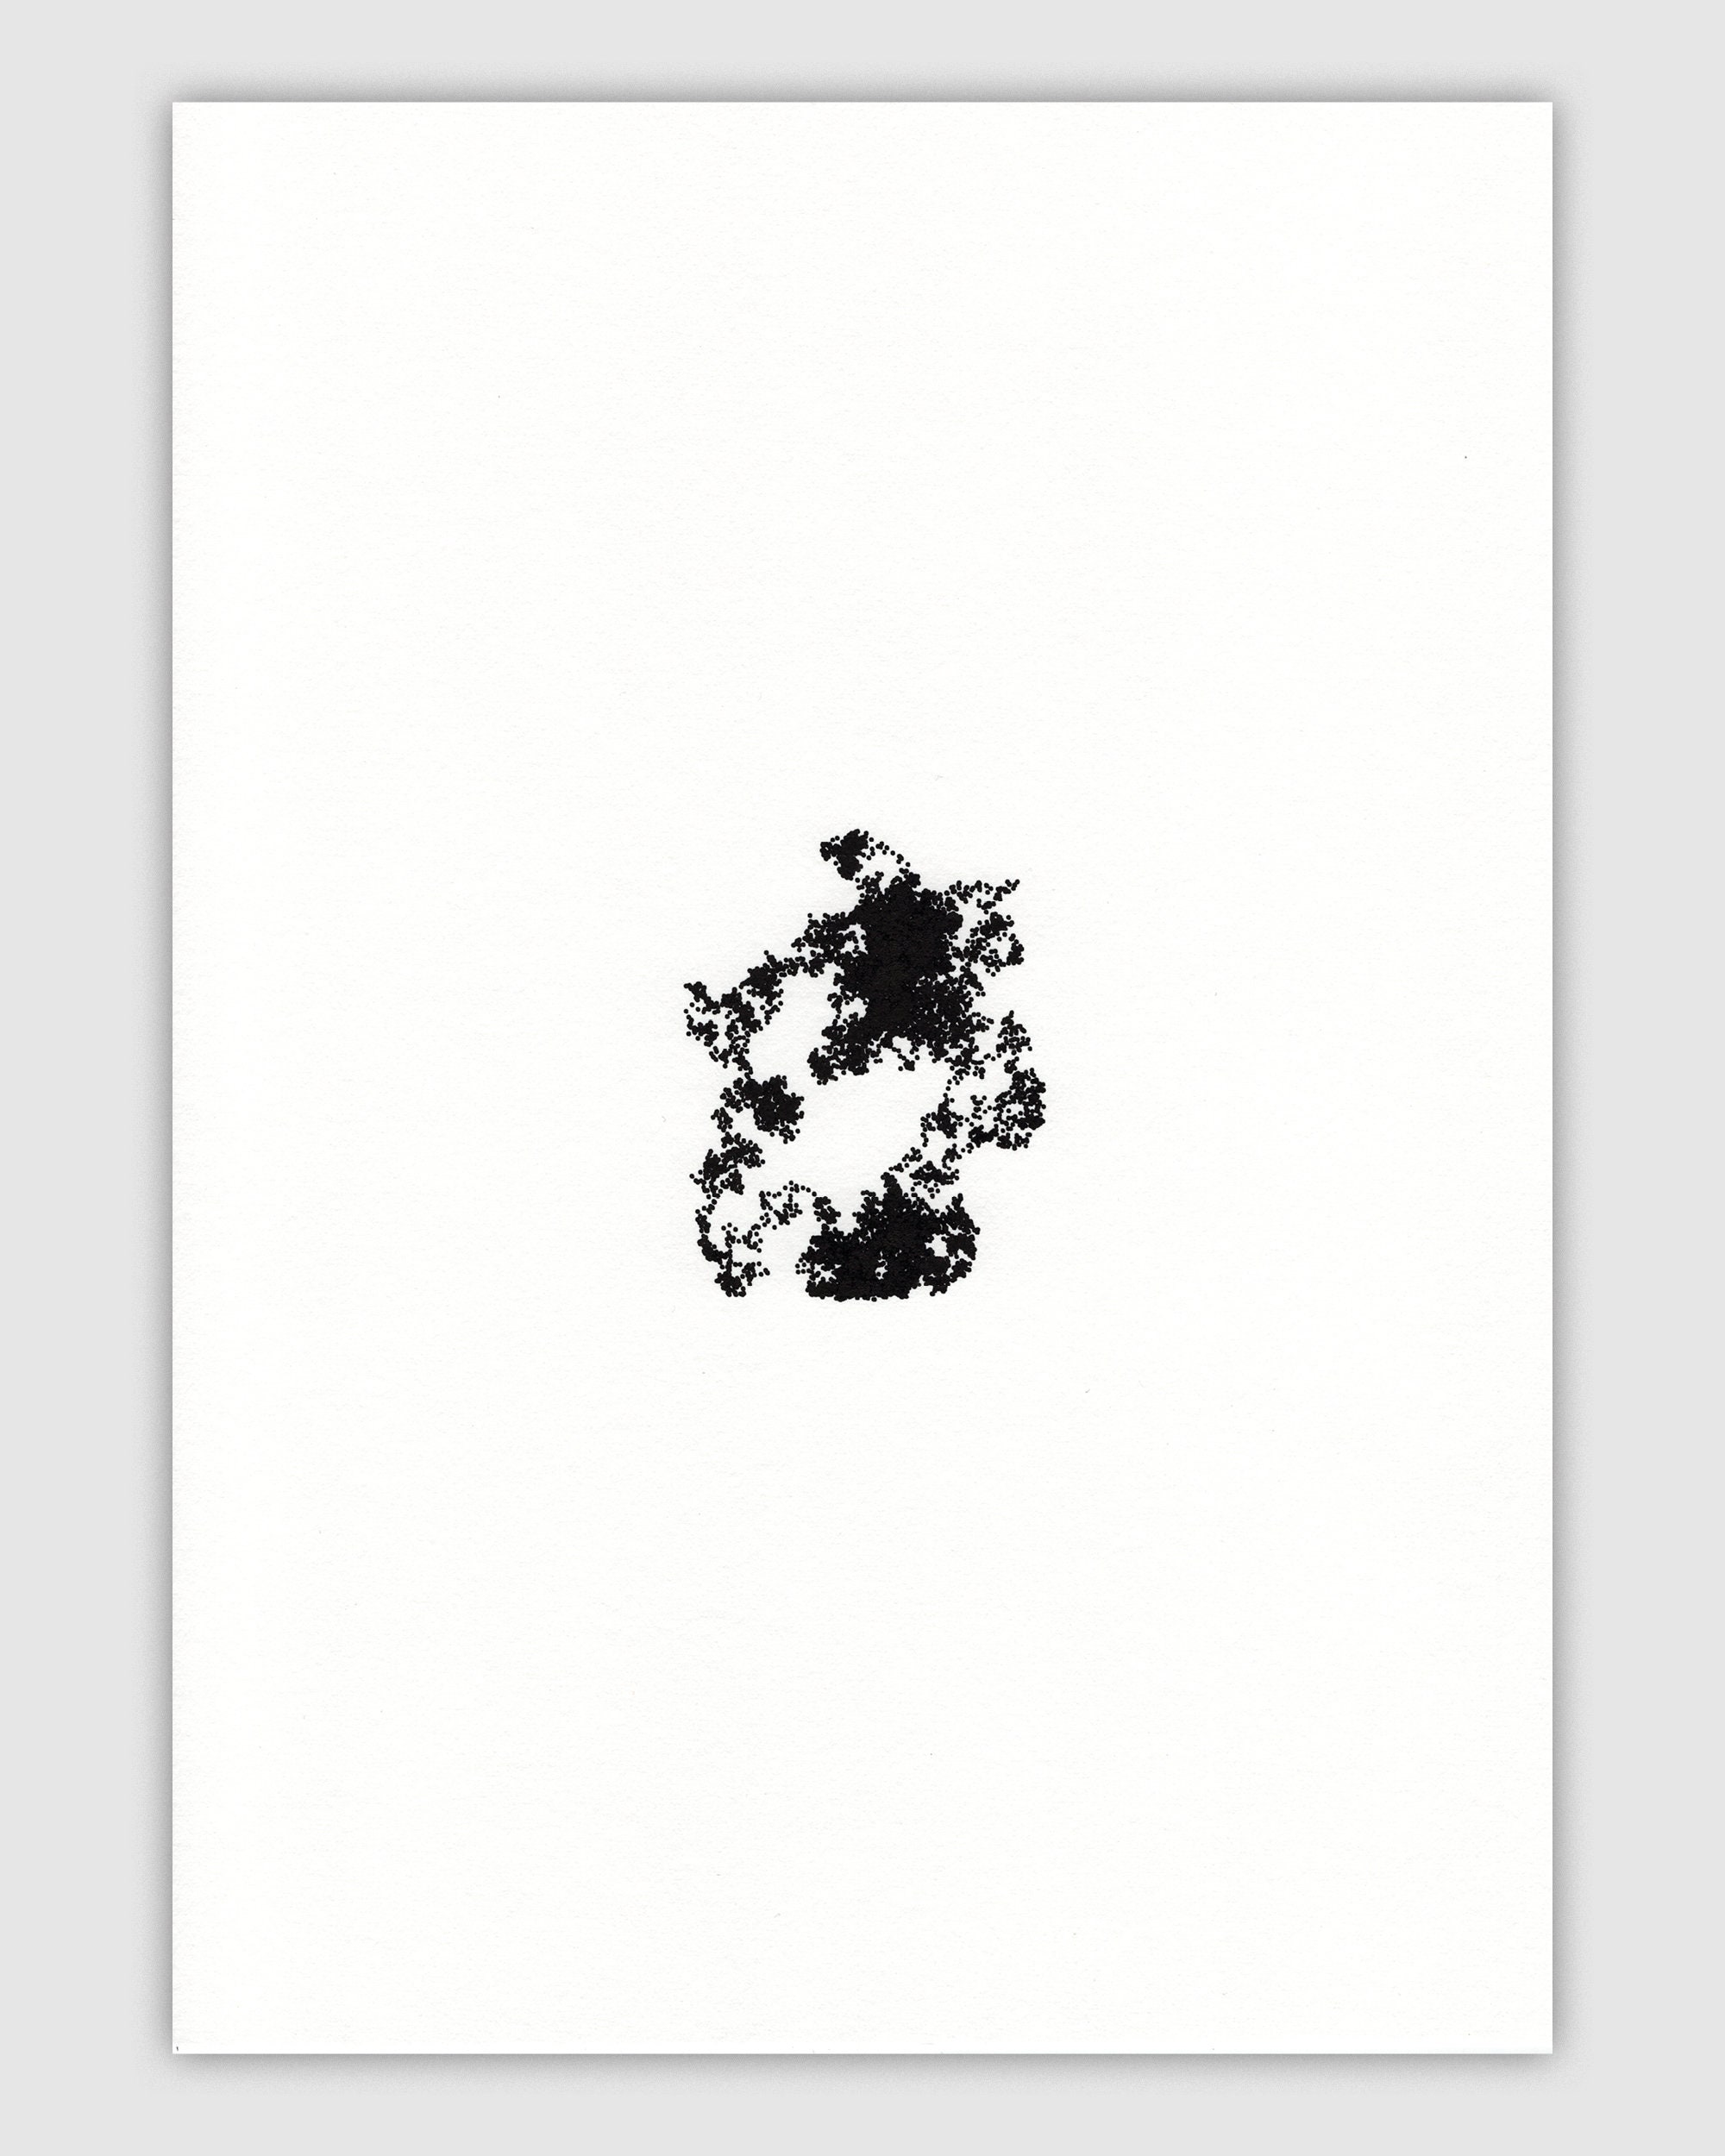 Rhino, white gel pen on black drawing paper. : r/PlotterArt